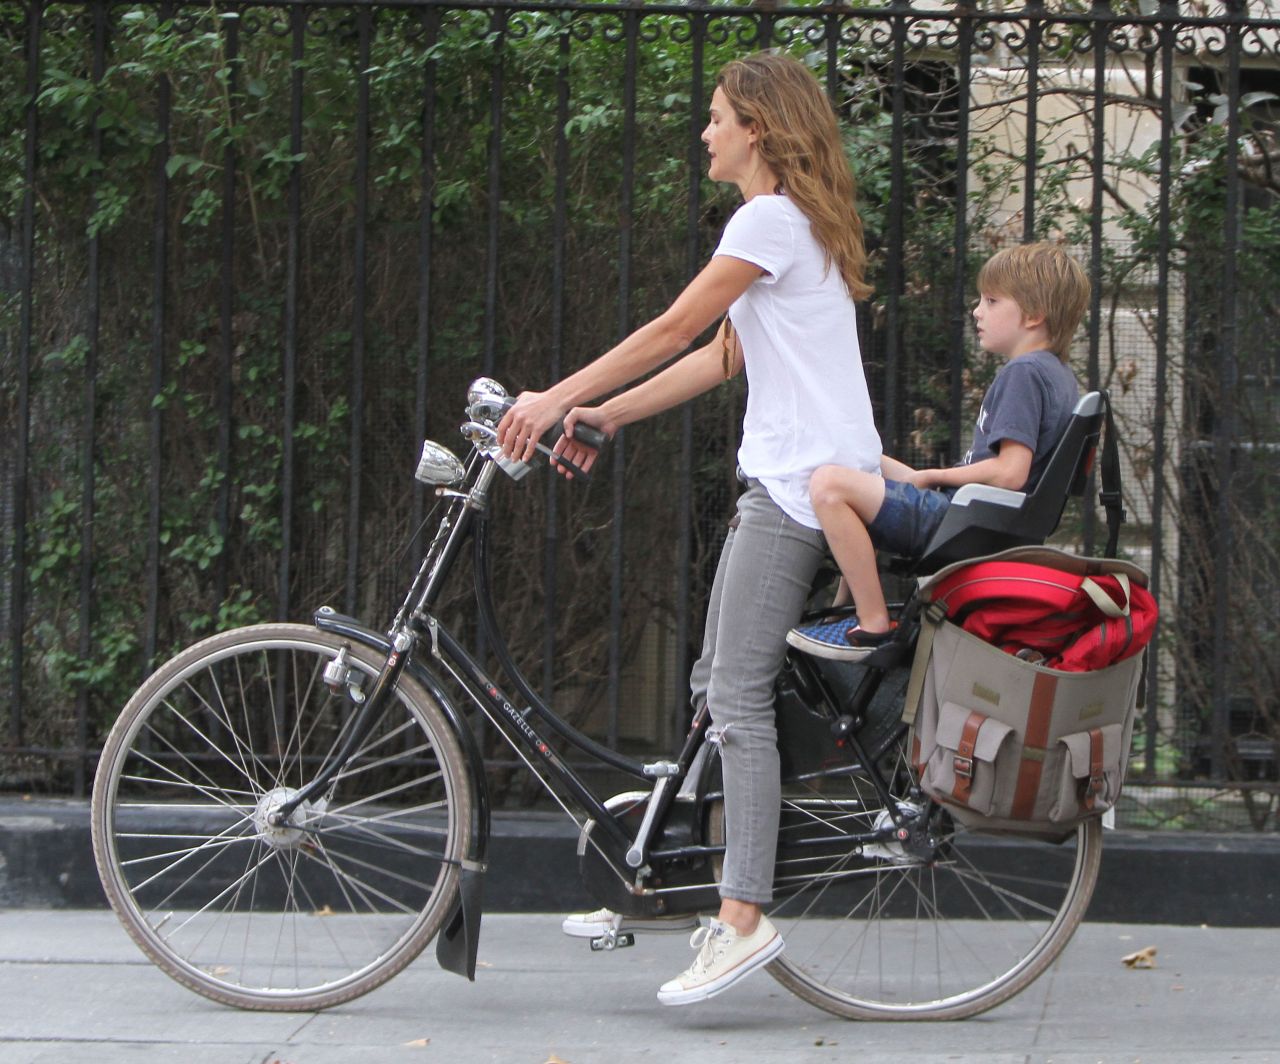 Keri Russell Street Style - Riding a Bike in Brooklyn, Sept. 2014 ...